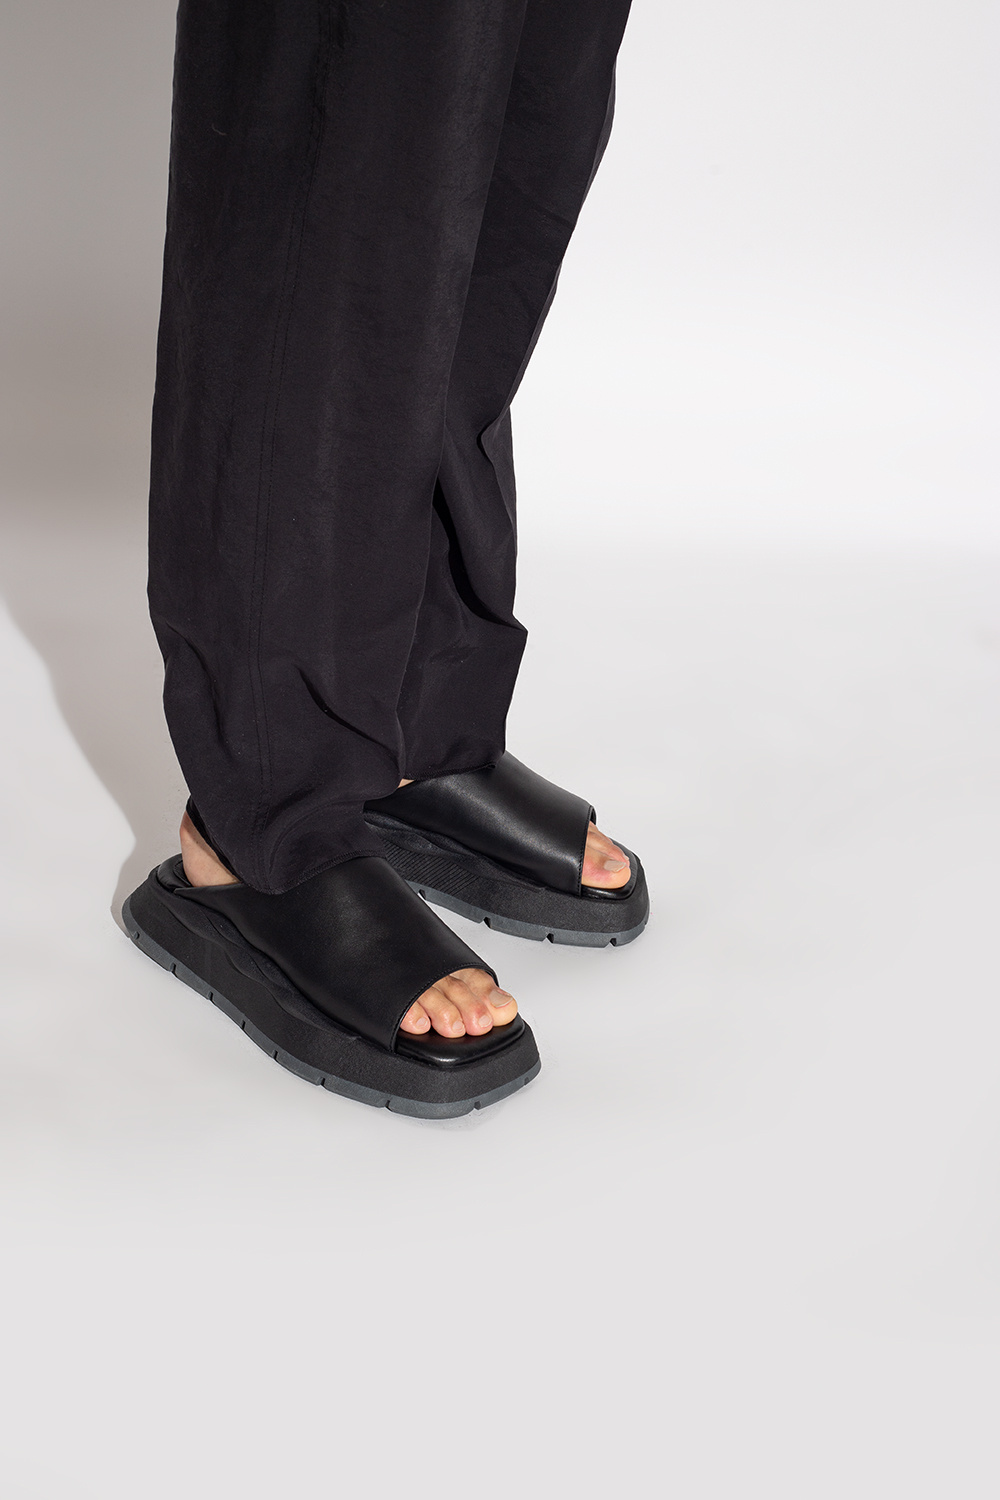 Eytys ‘Sensa’ slides | Men's Shoes | Vitkac